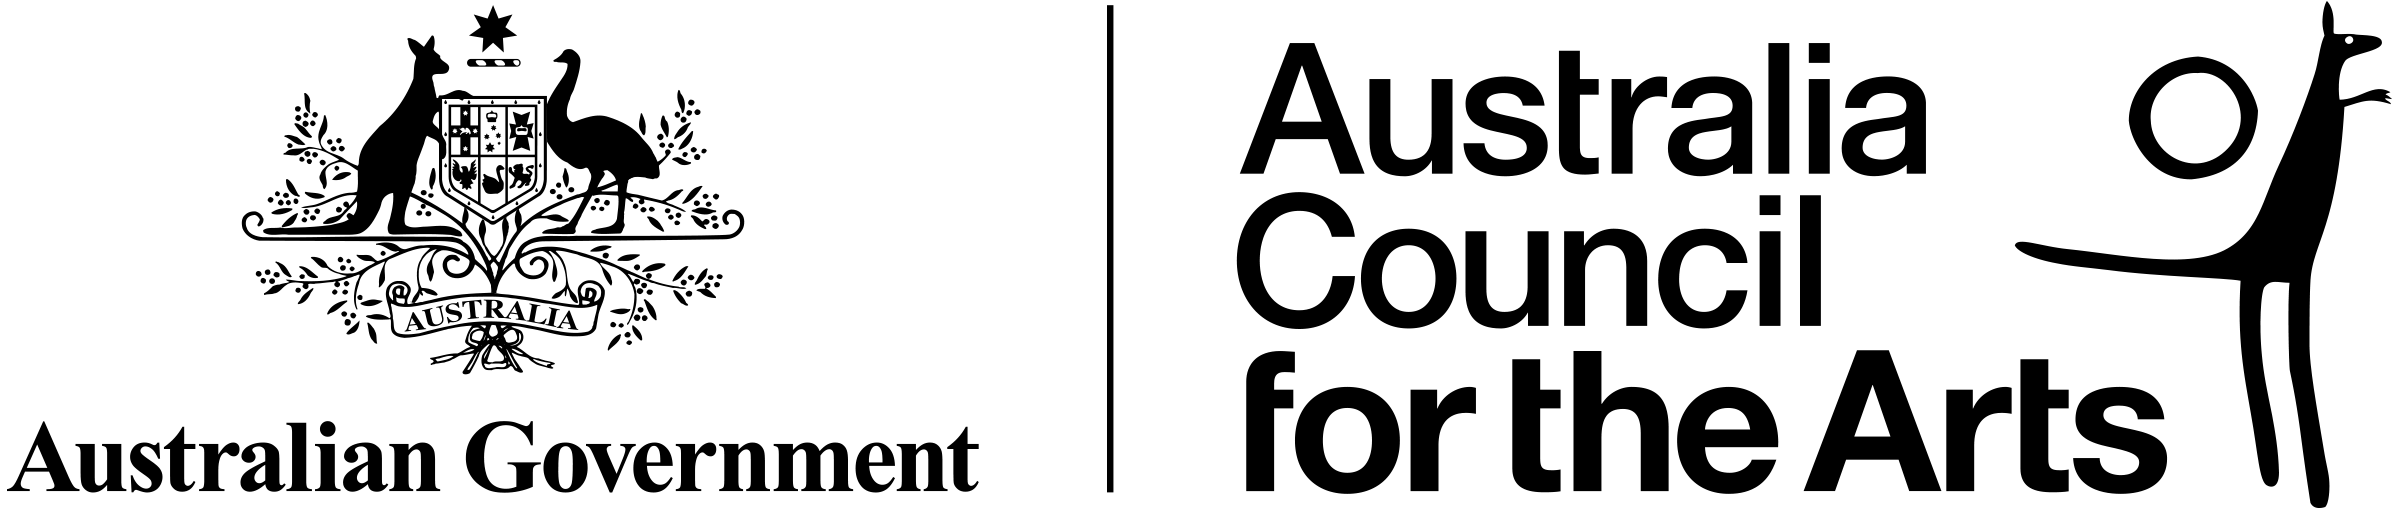 Australia Council logo black.png